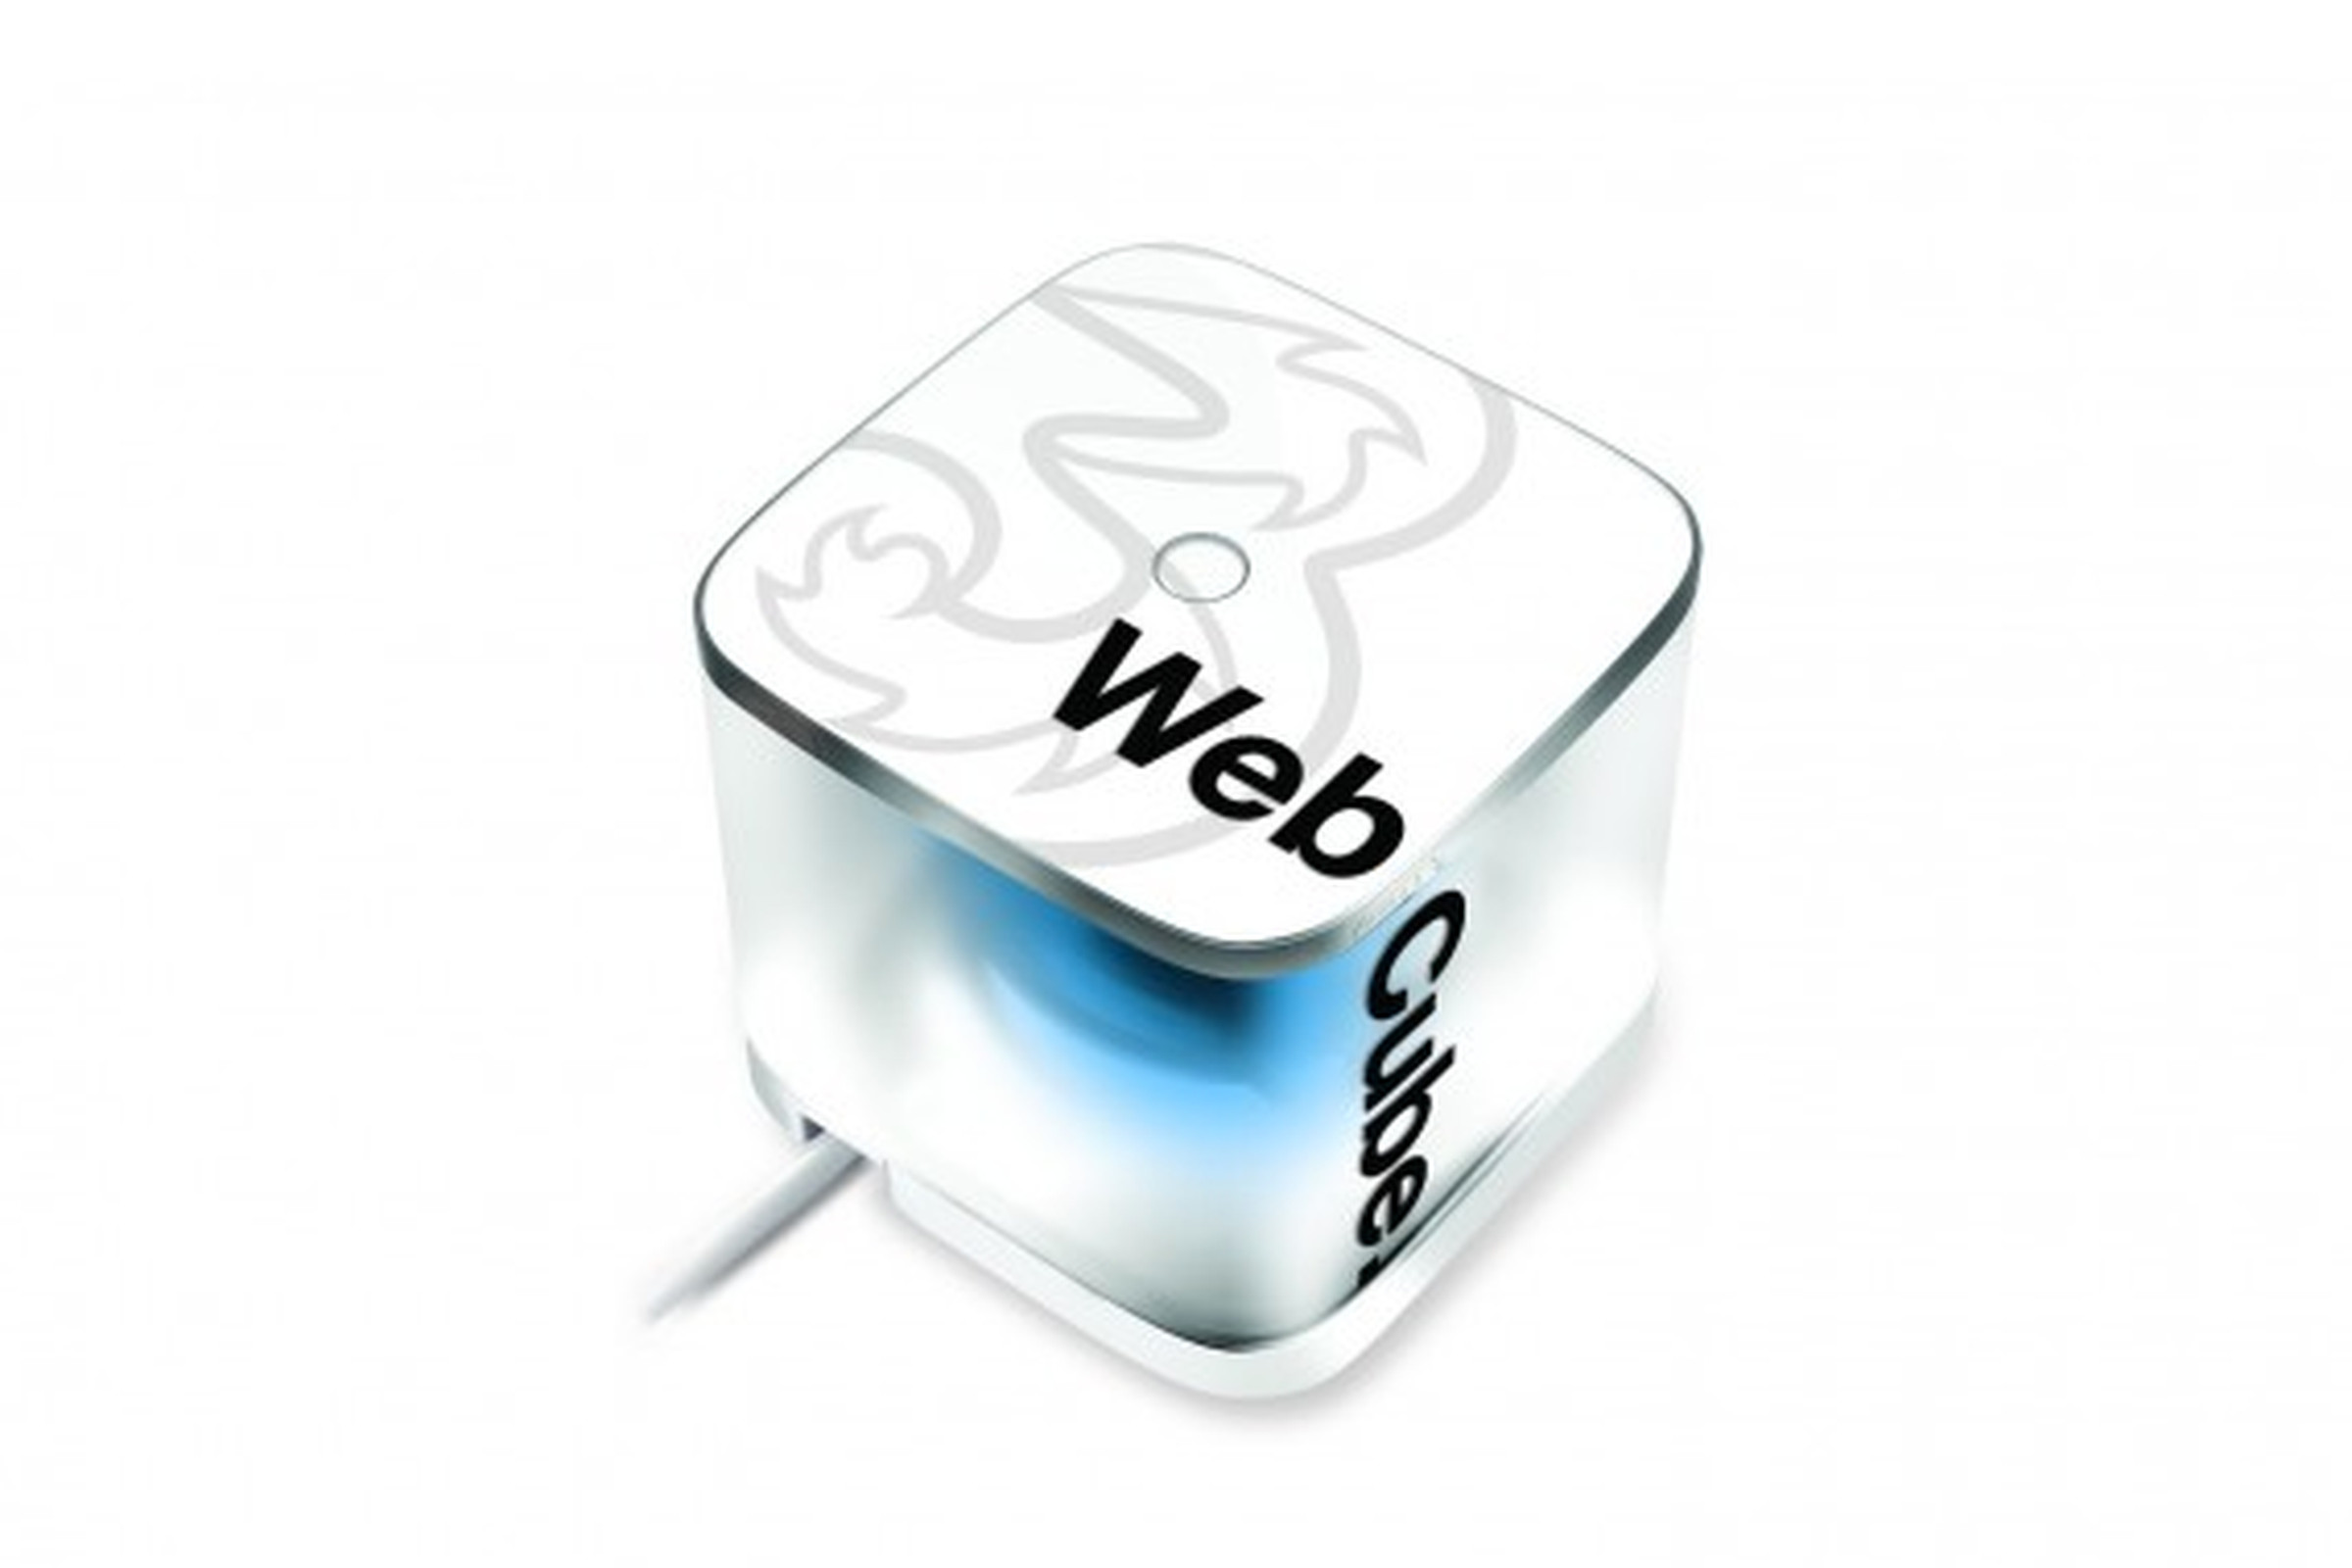 Three Wireless Web Cube